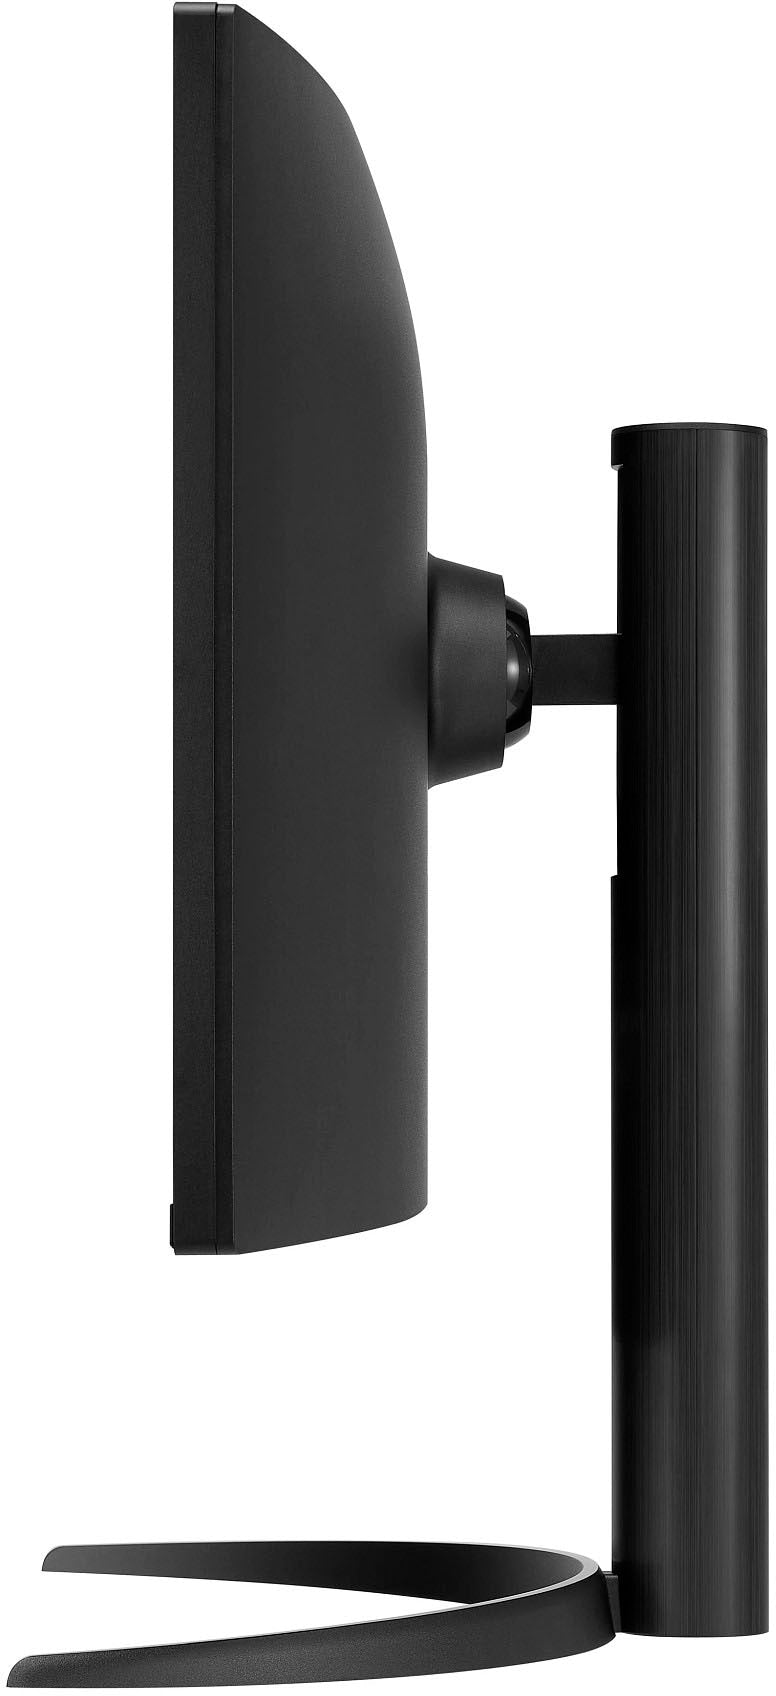 LG - 34” LED Curved UltraWide QHD FreeSync Premium Monitor with HDR (HDMI, DisplayPort) - Black_5